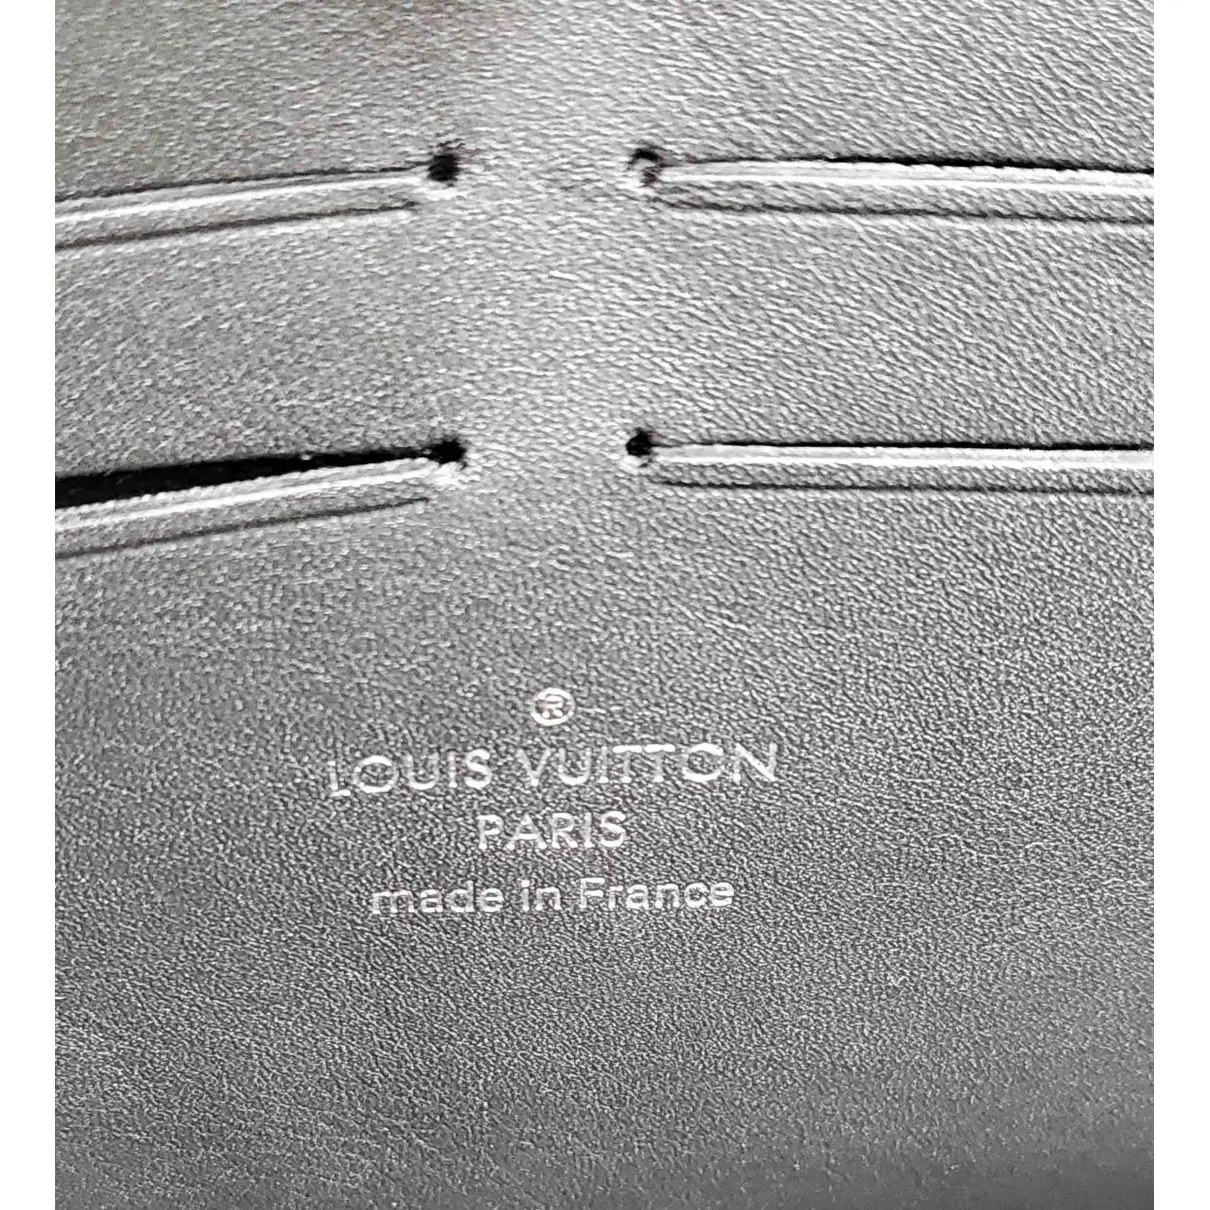 Trunk leather bag Louis Vuitton